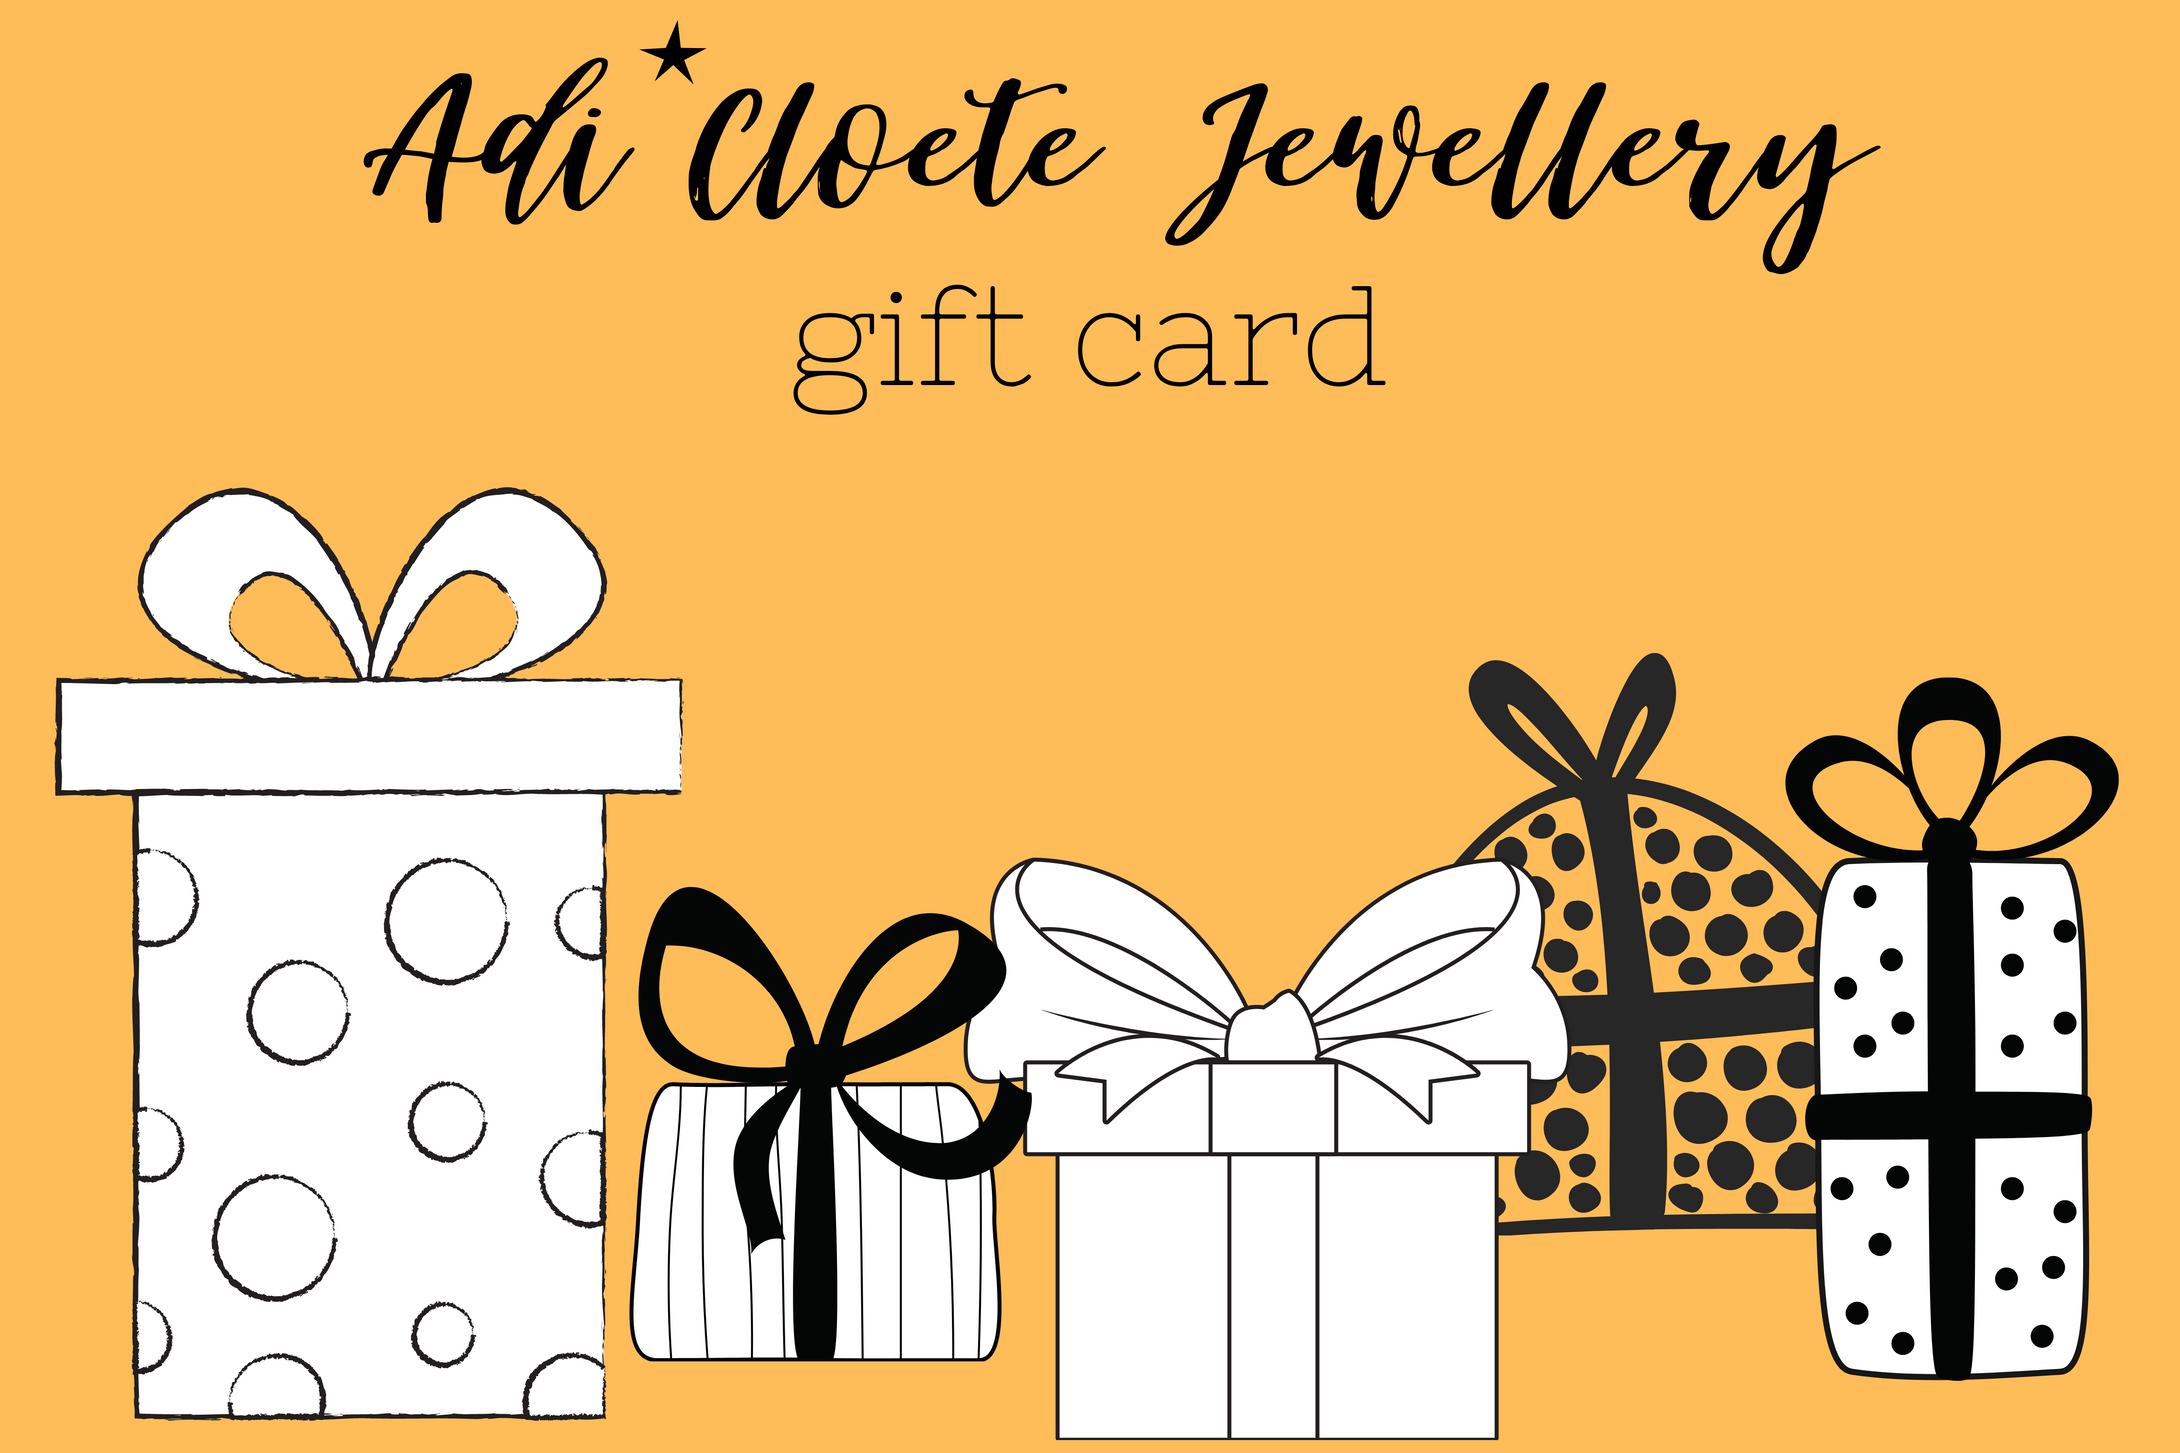 Adi Cloete Jewellery Gift Card